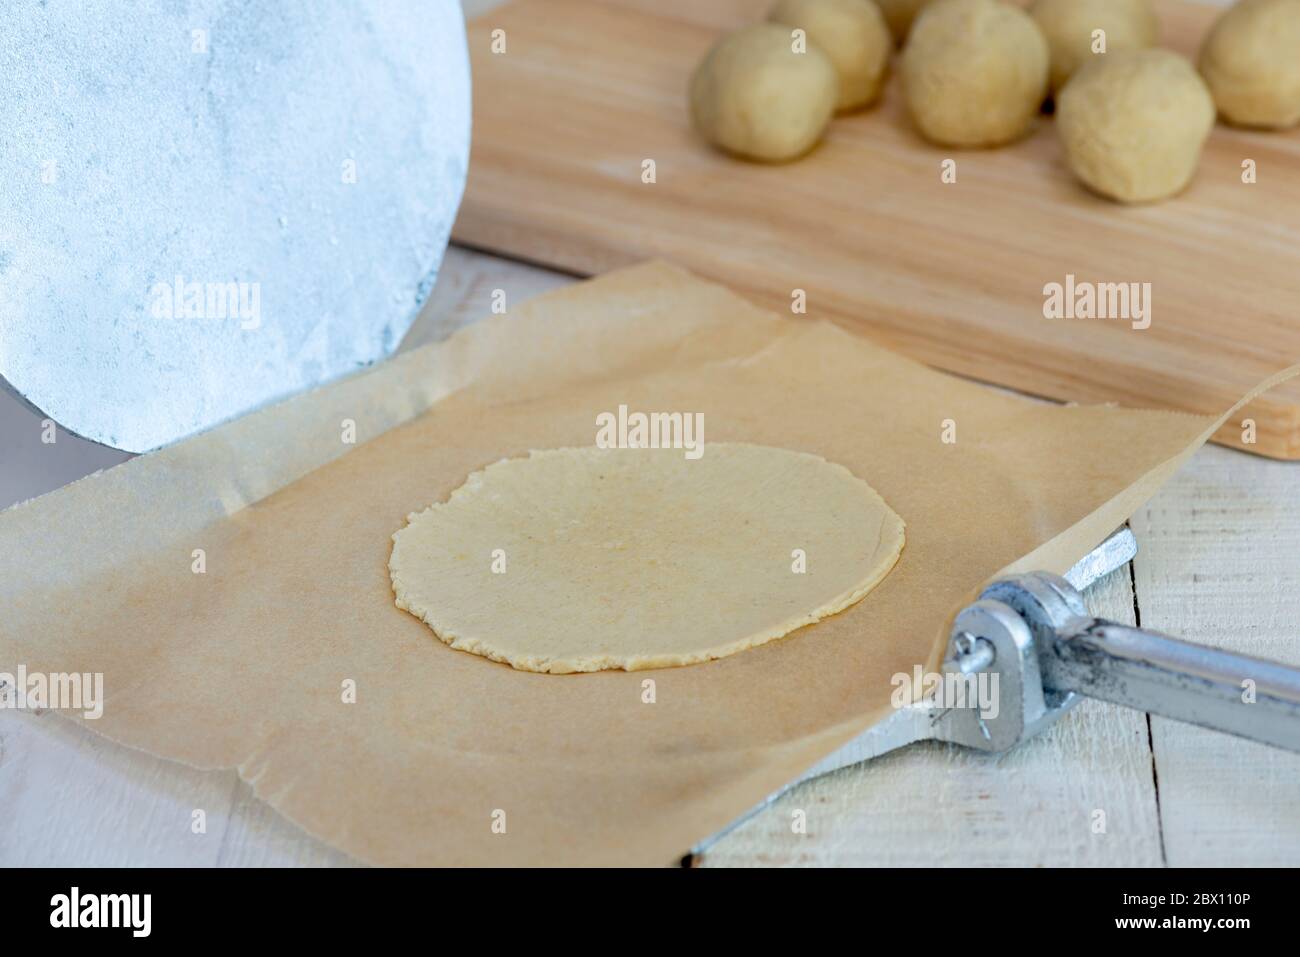 Making authentic corn tortillas - dough ball pressed flat by tortilla press. Stock Photo